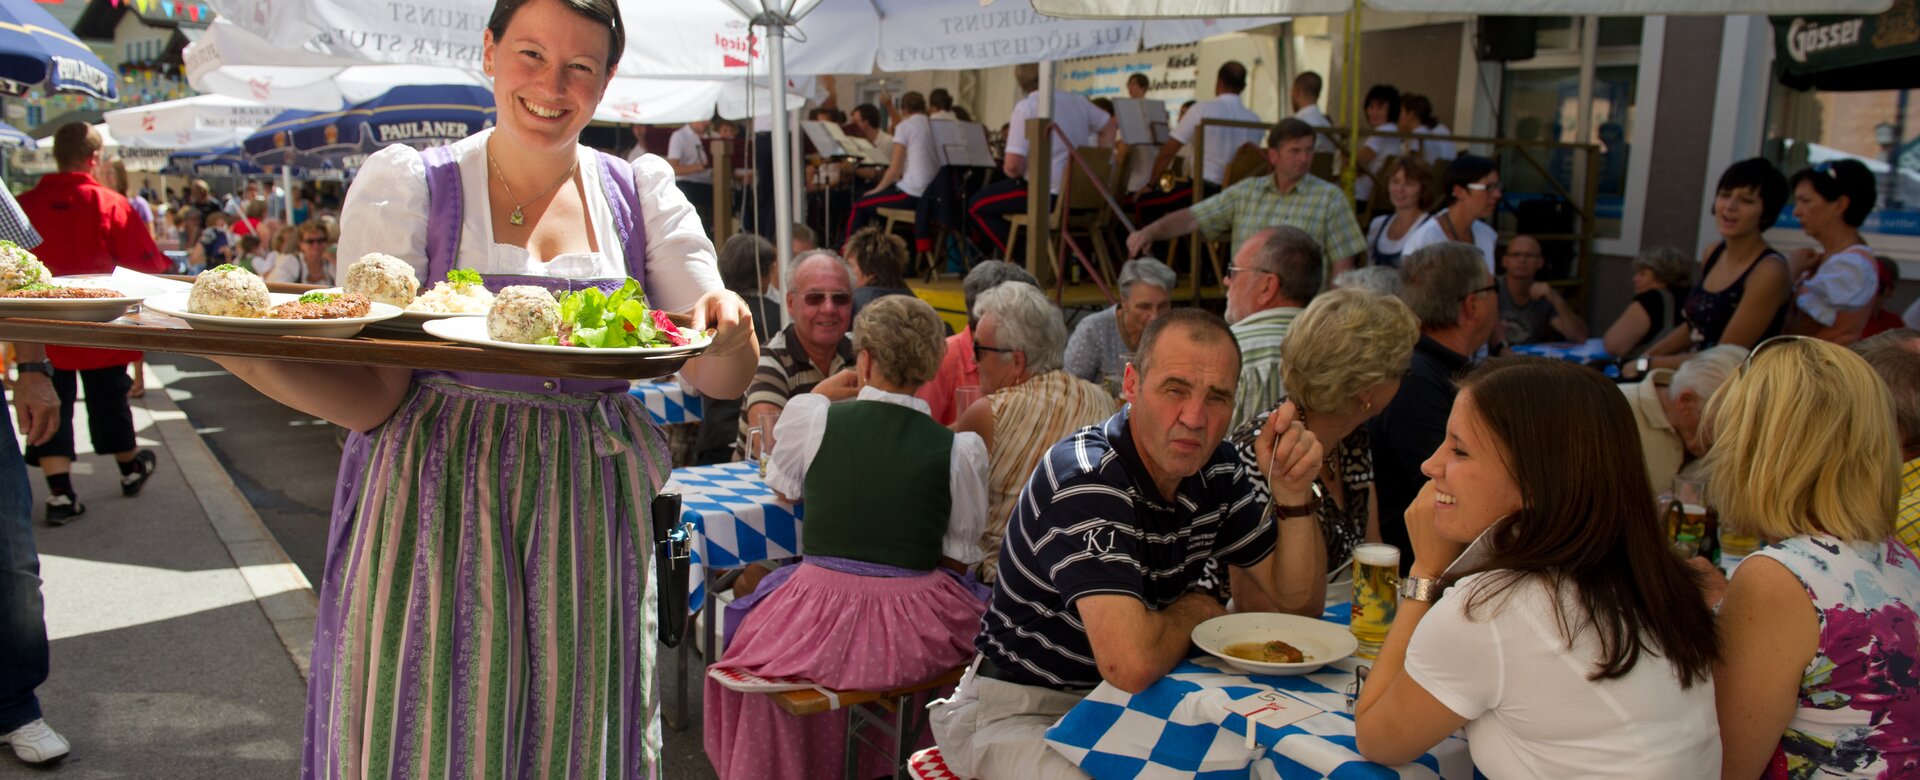 Dumpling festival | © Tourismusverband Radstadt